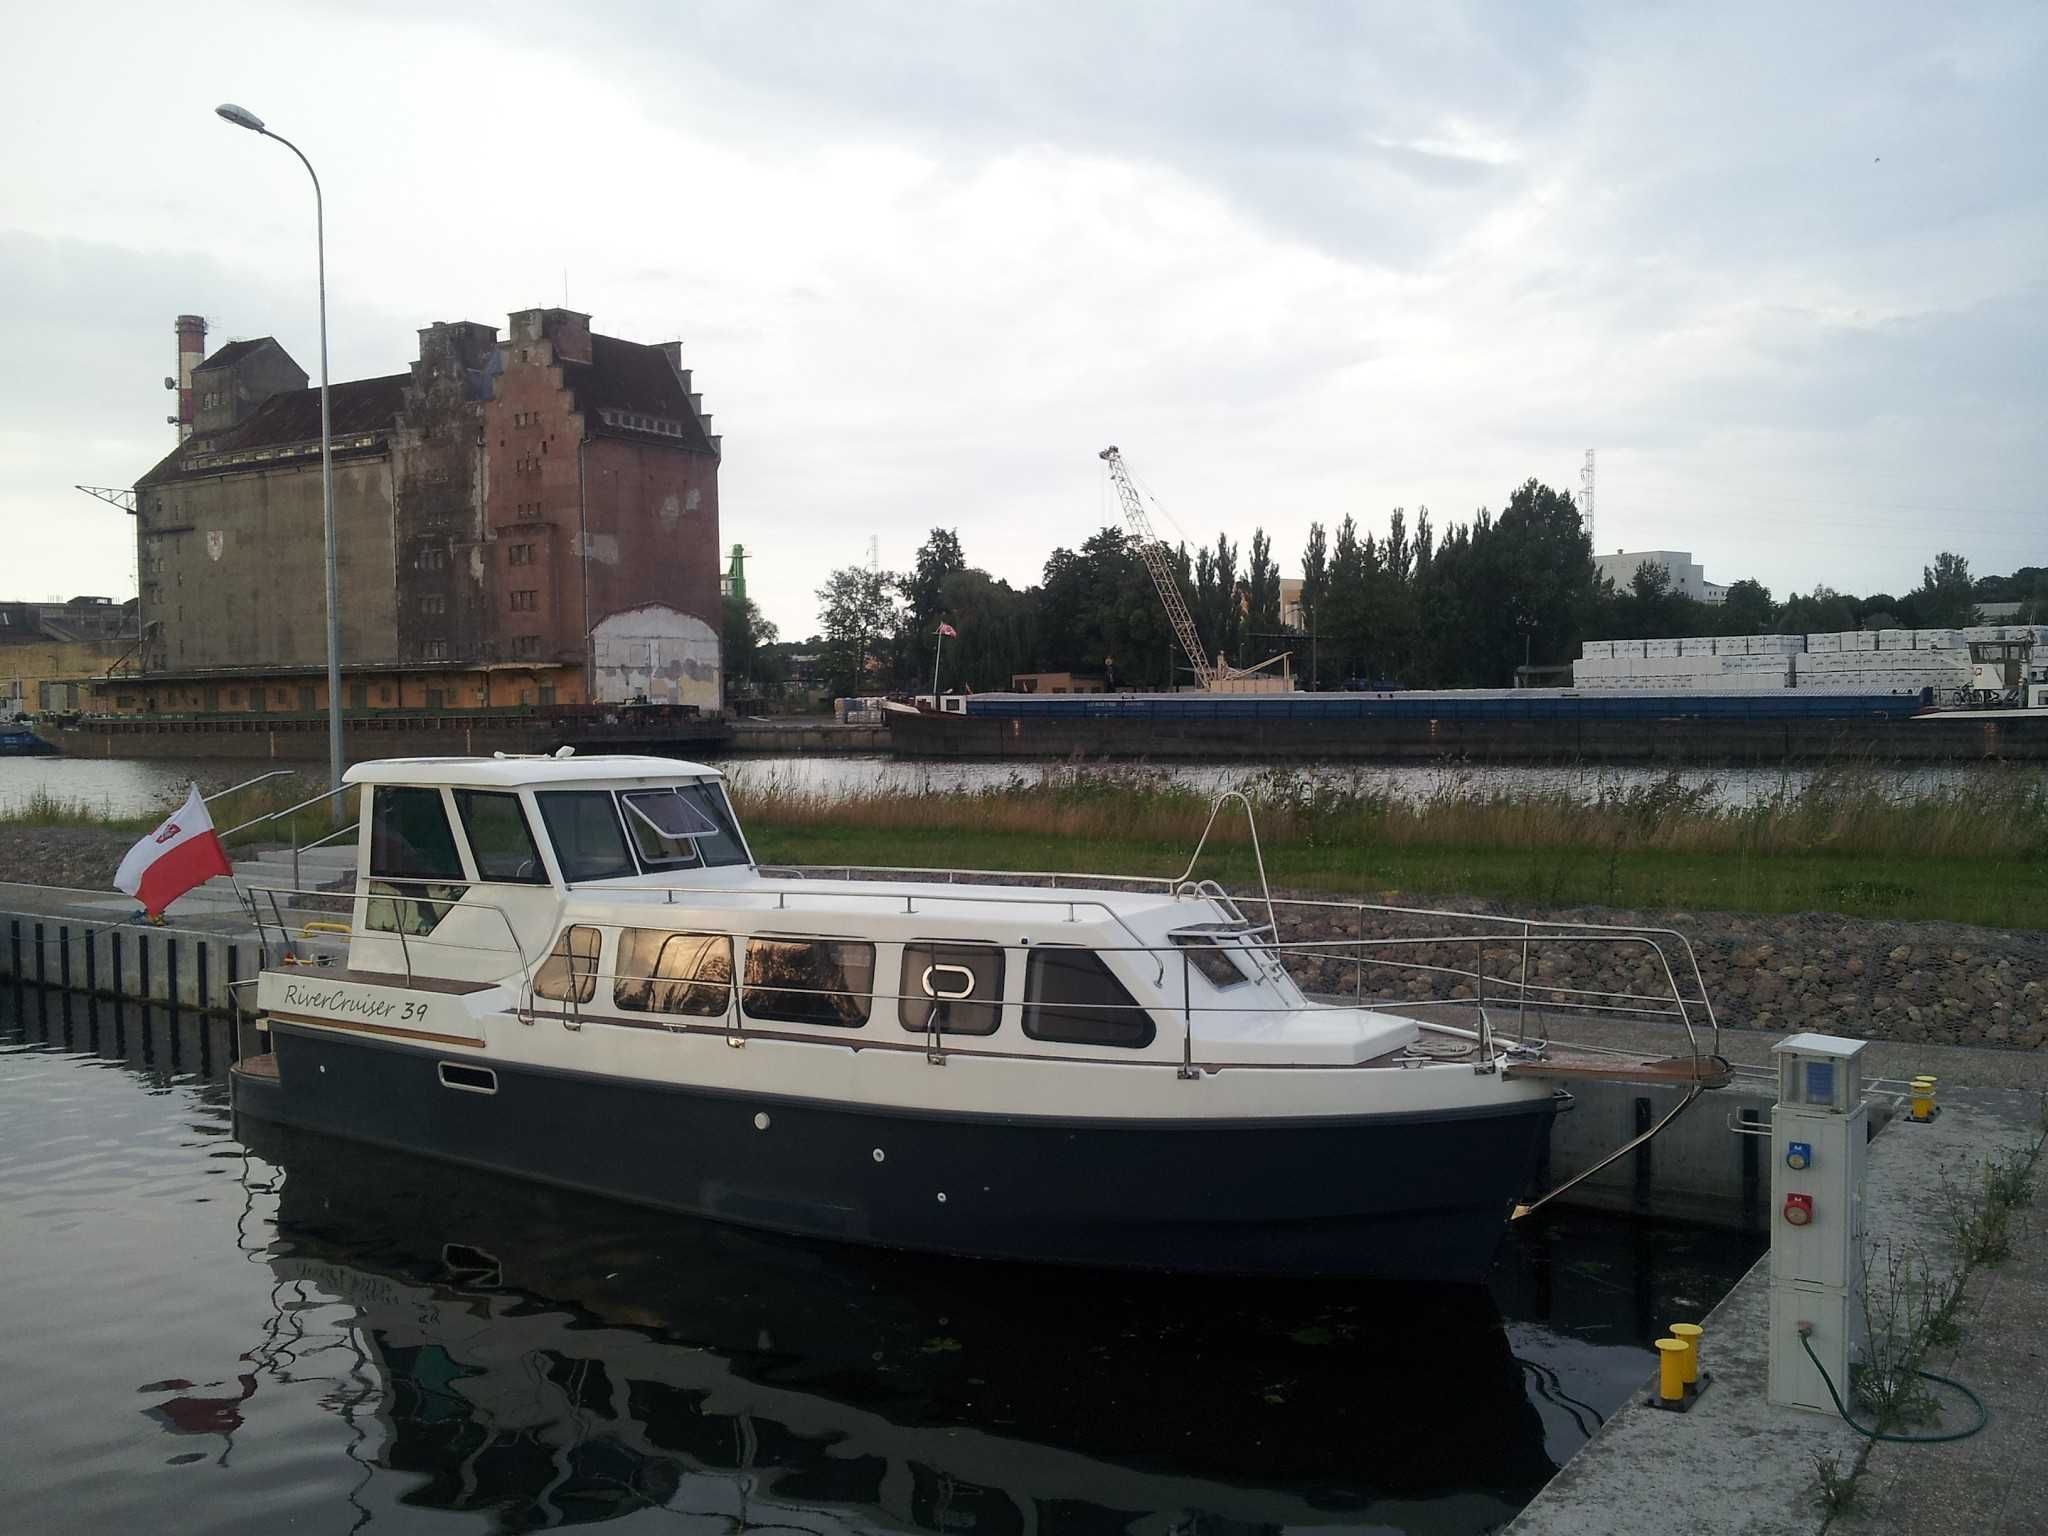 Jacht motorowy houseboat RiverCruiser 39 - Iława